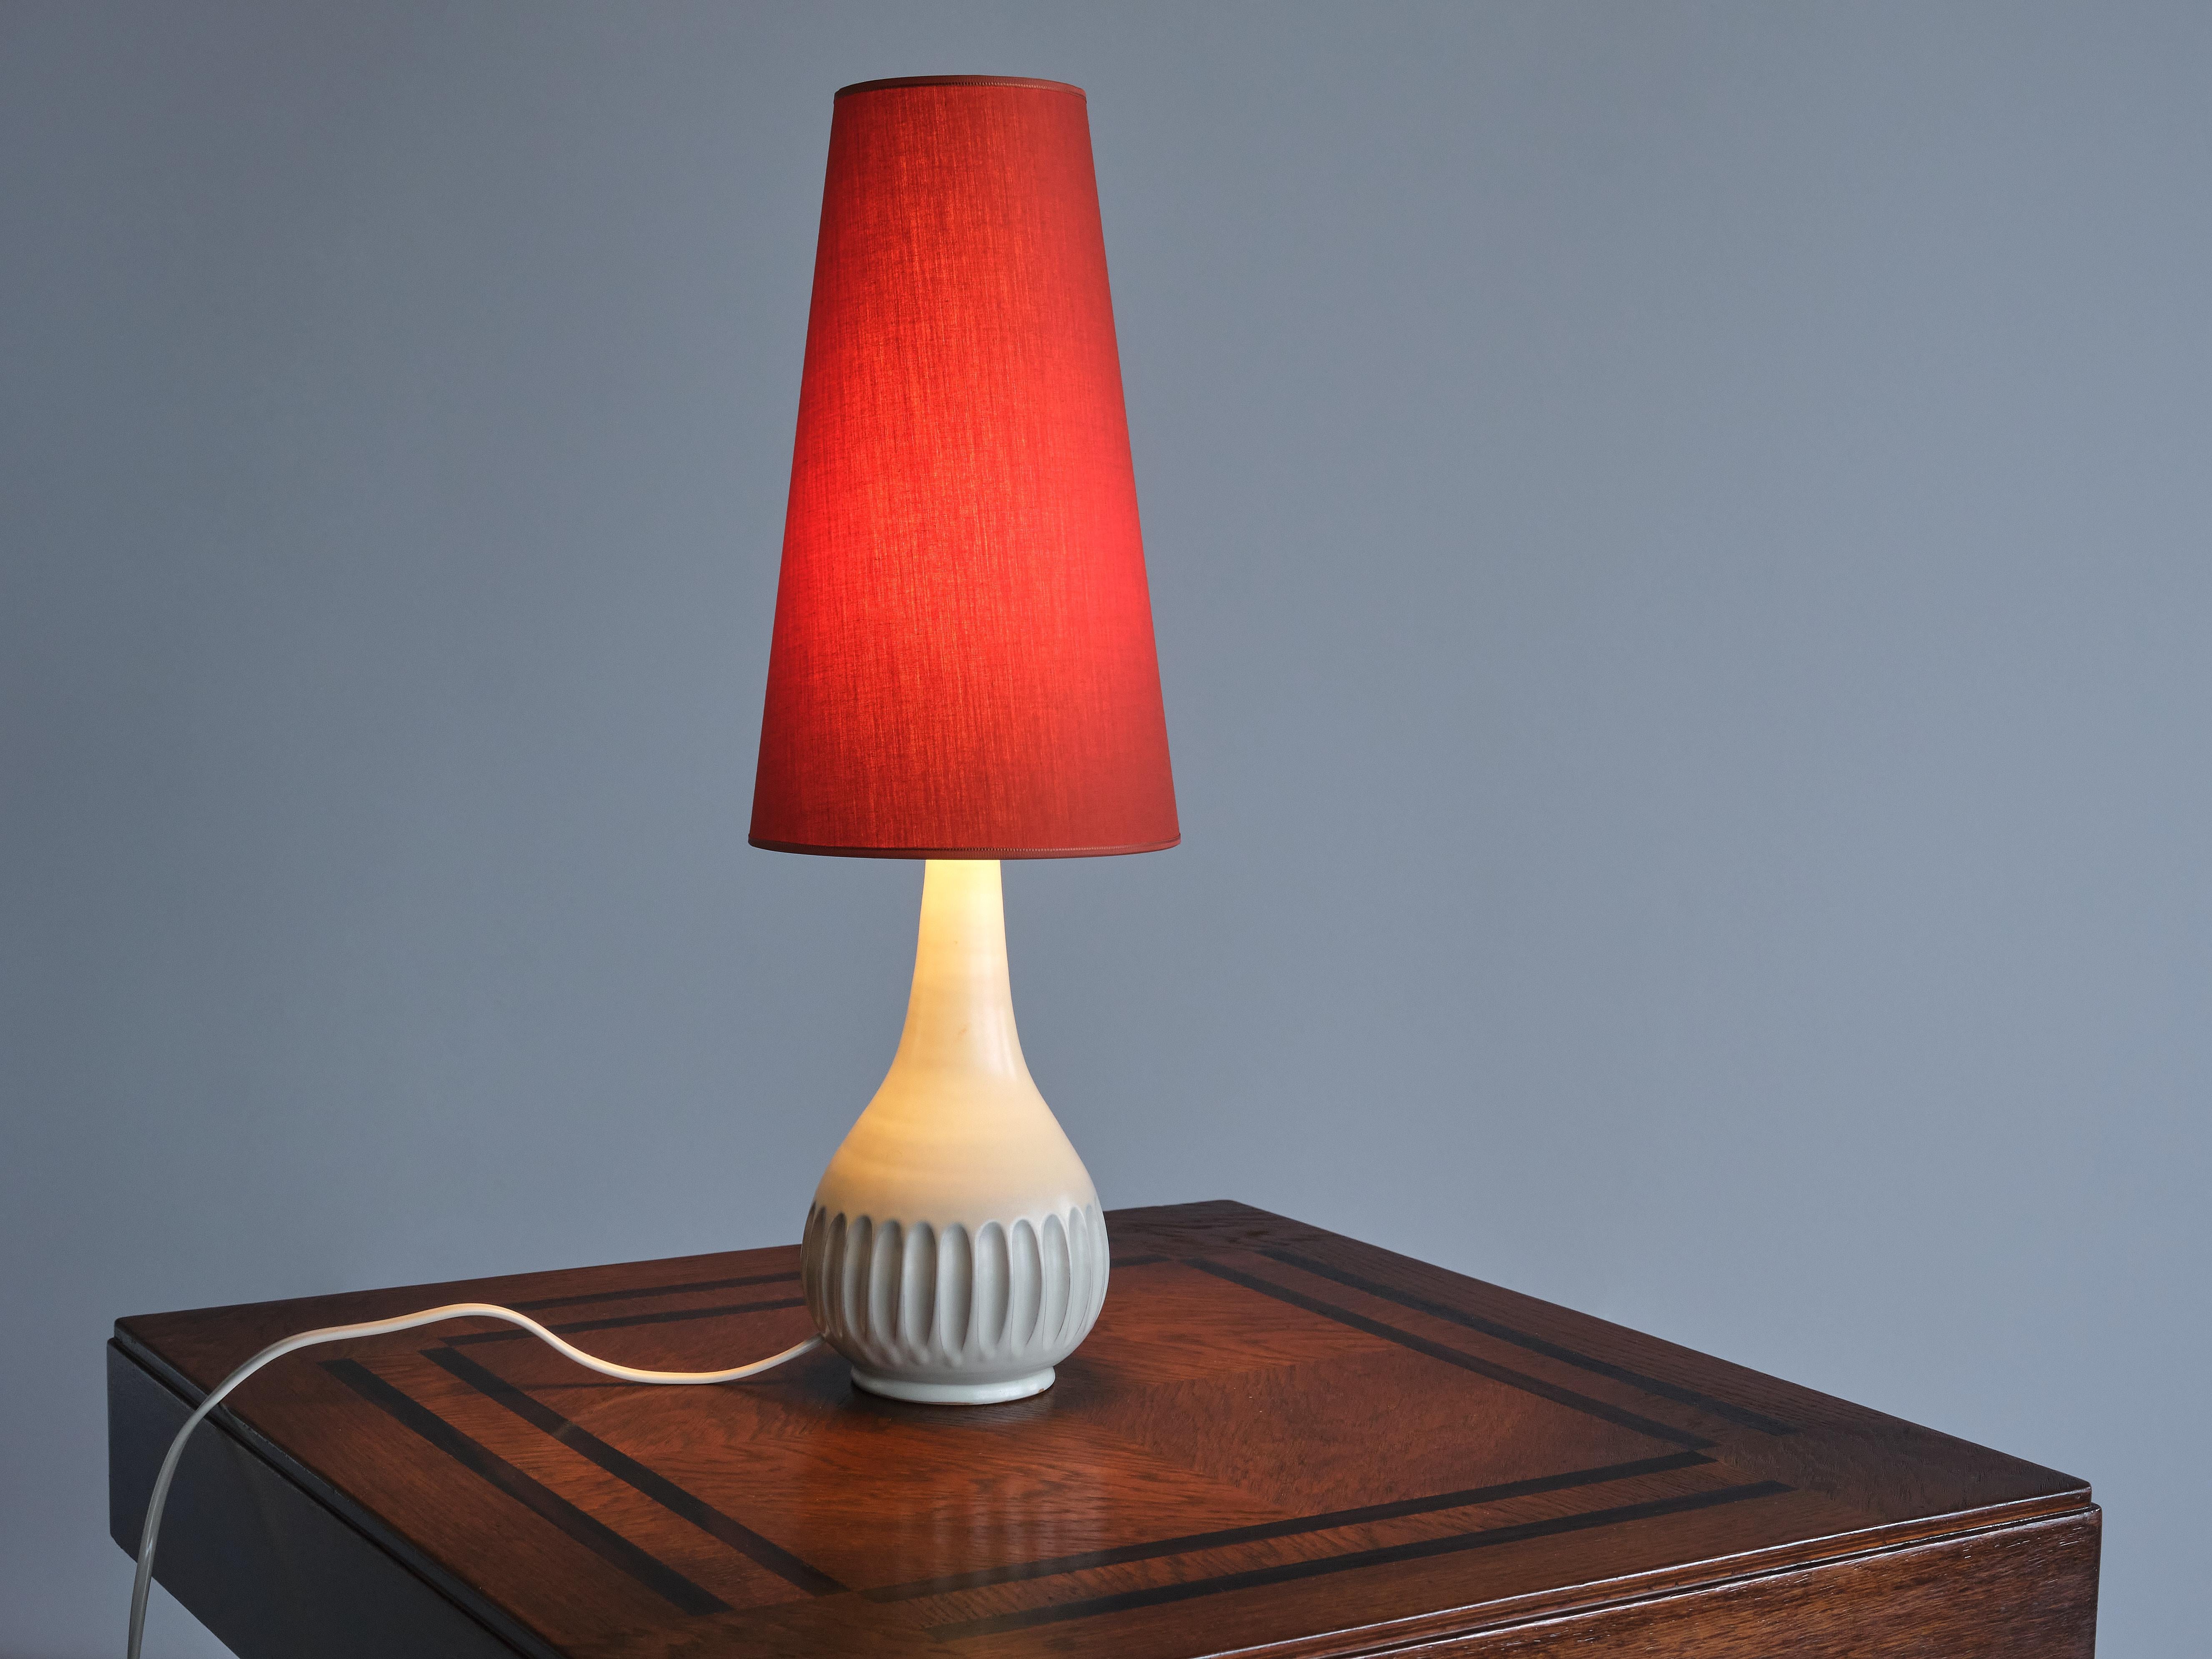 Anna-Lisa Thomson Ceramic Table Lamp, Upsala-Ekeby, Swedish Modern, 1940s For Sale 3